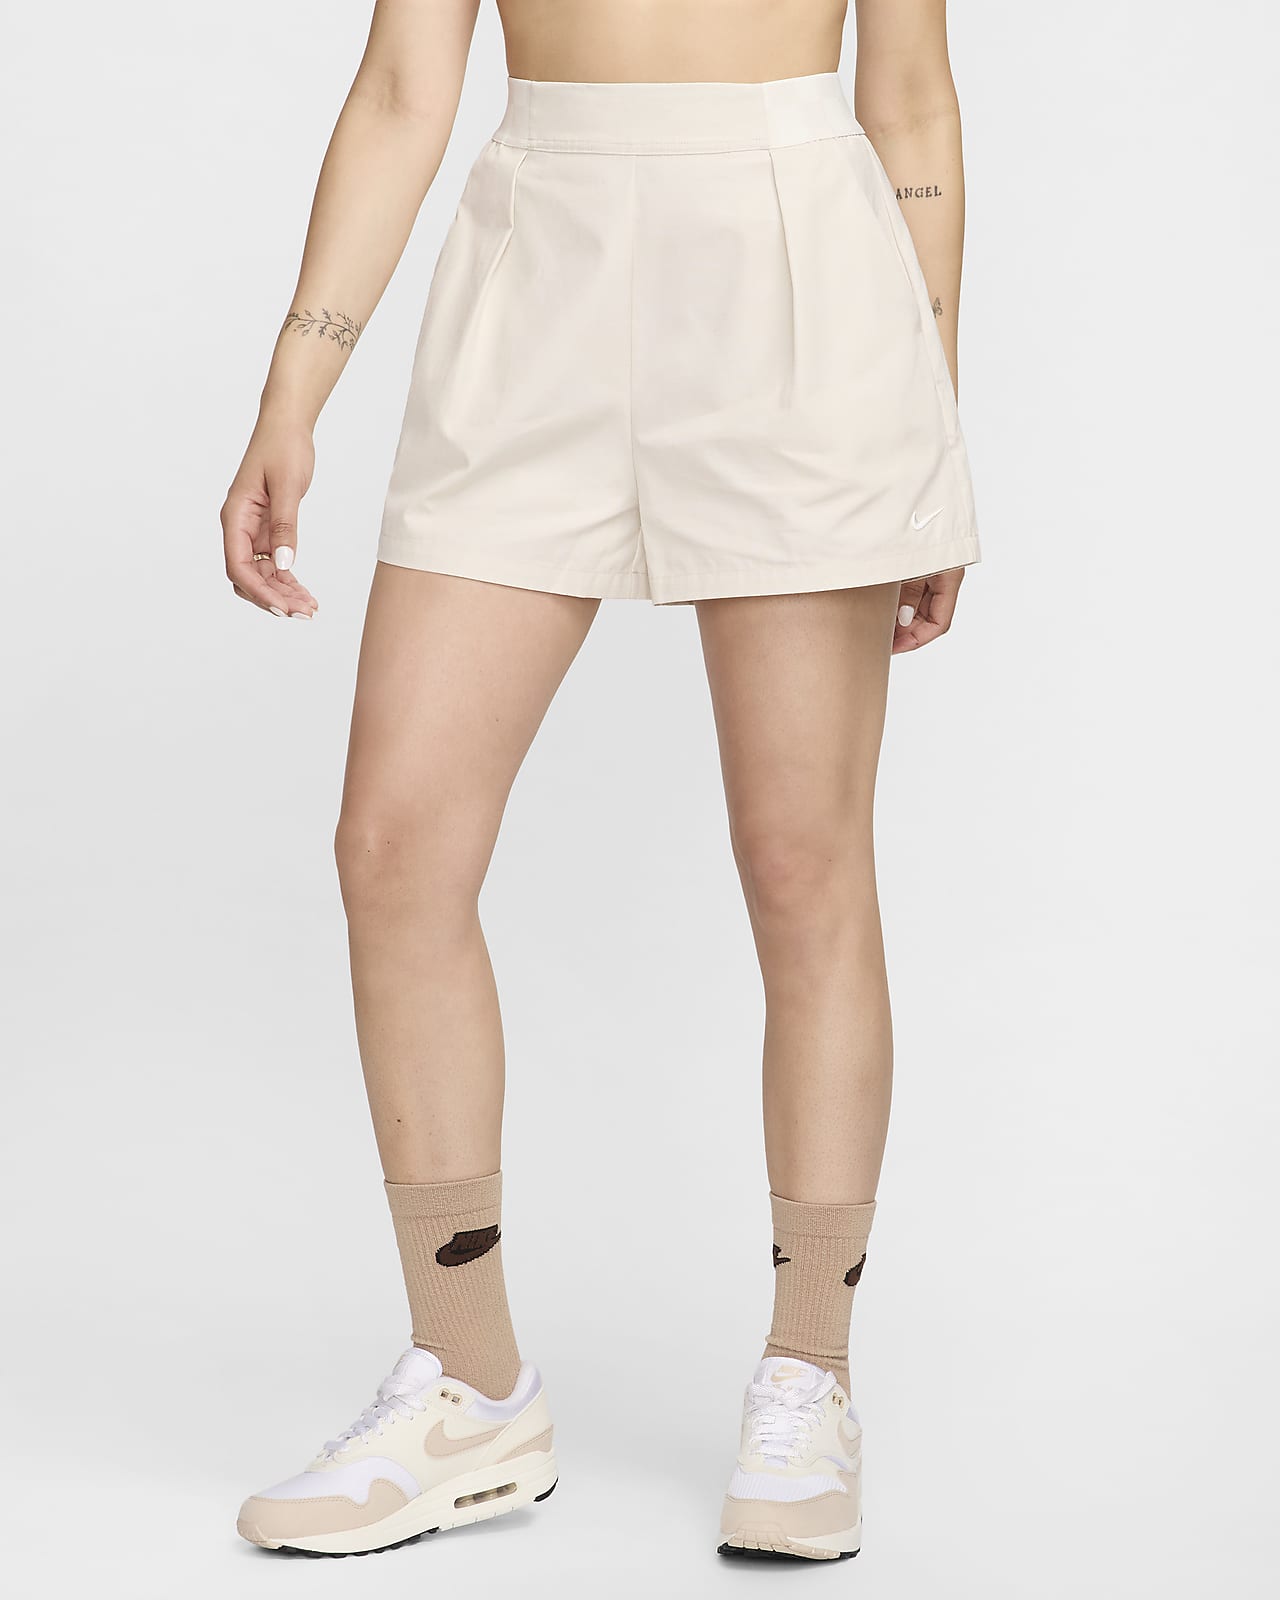 Short taille haute 8 cm Nike Sportswear Collection pour femme